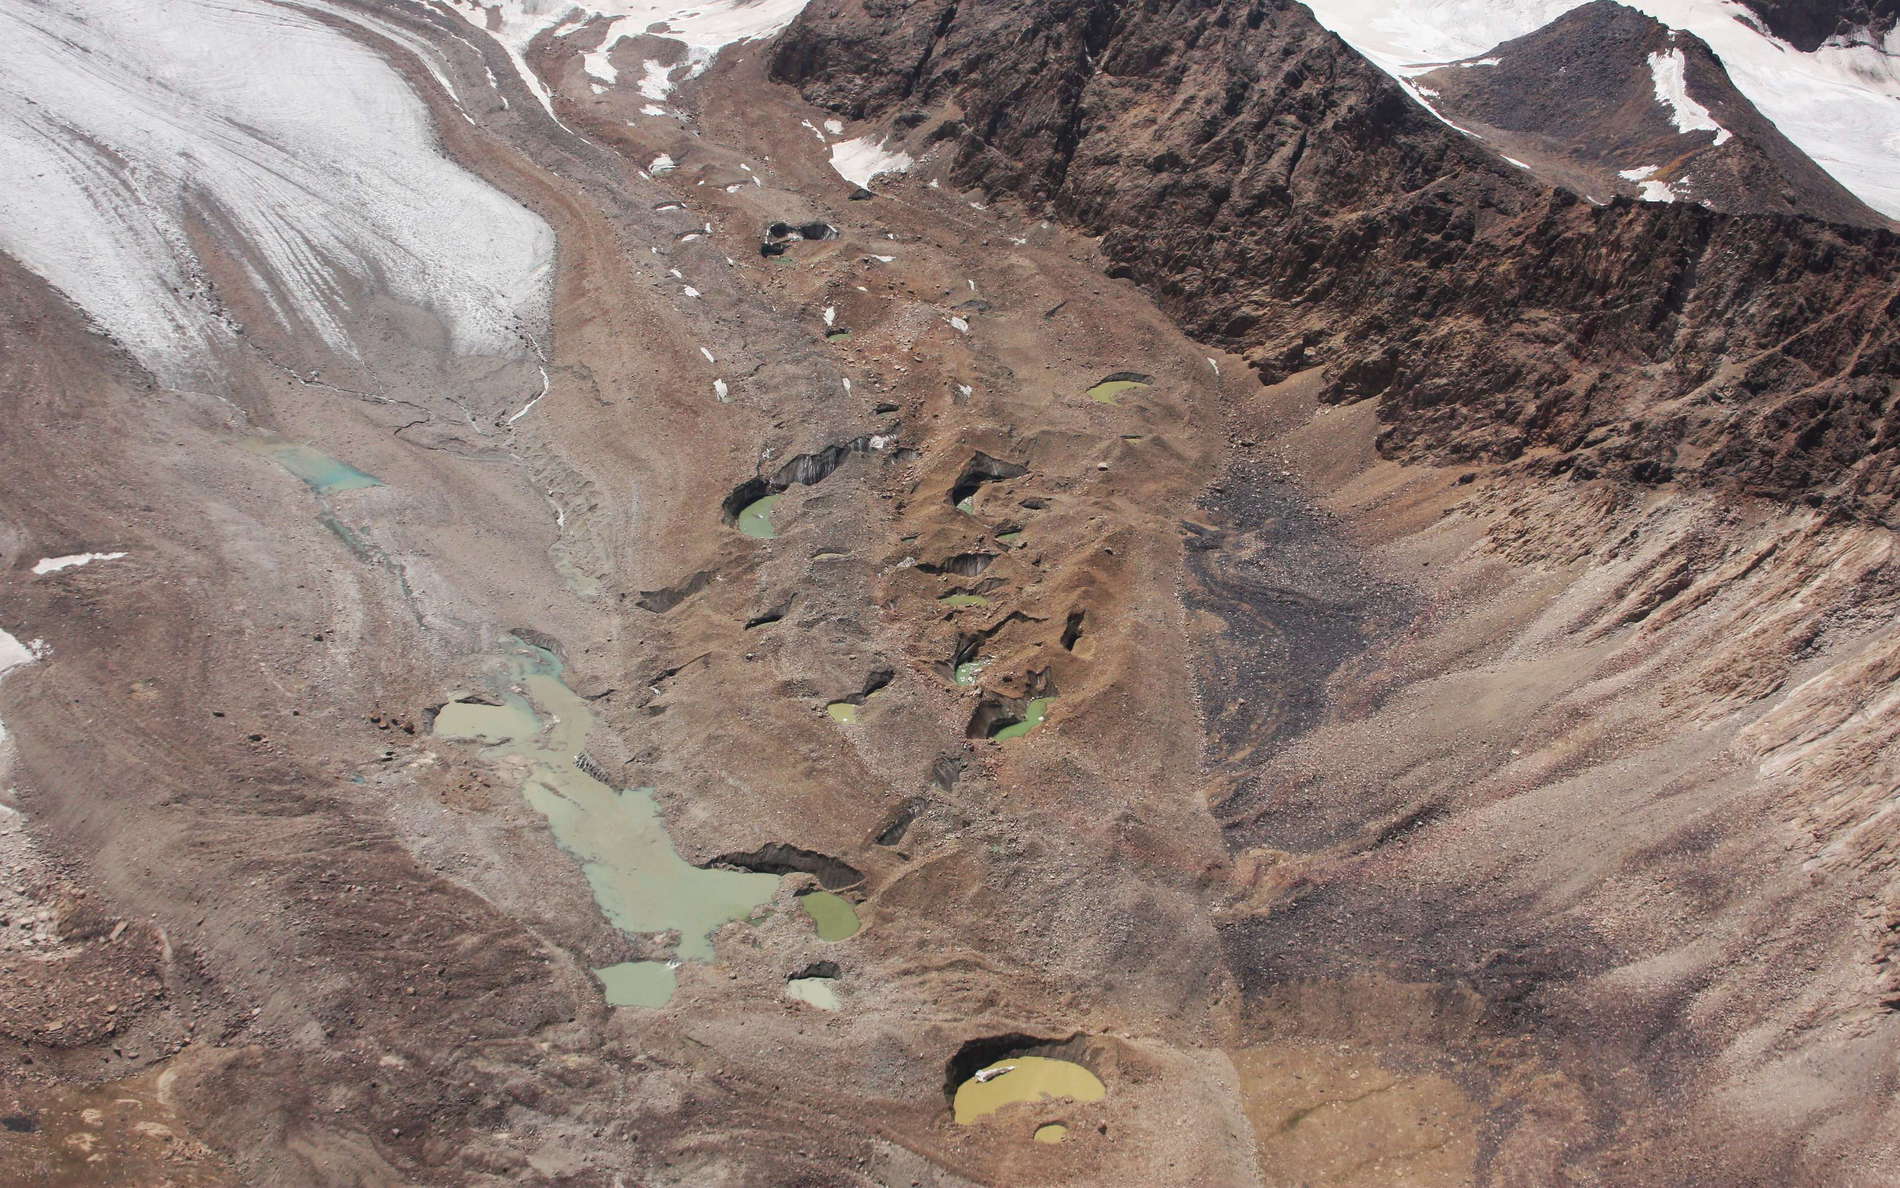 Gora Bakchigir  |  Decaying glacier tongue